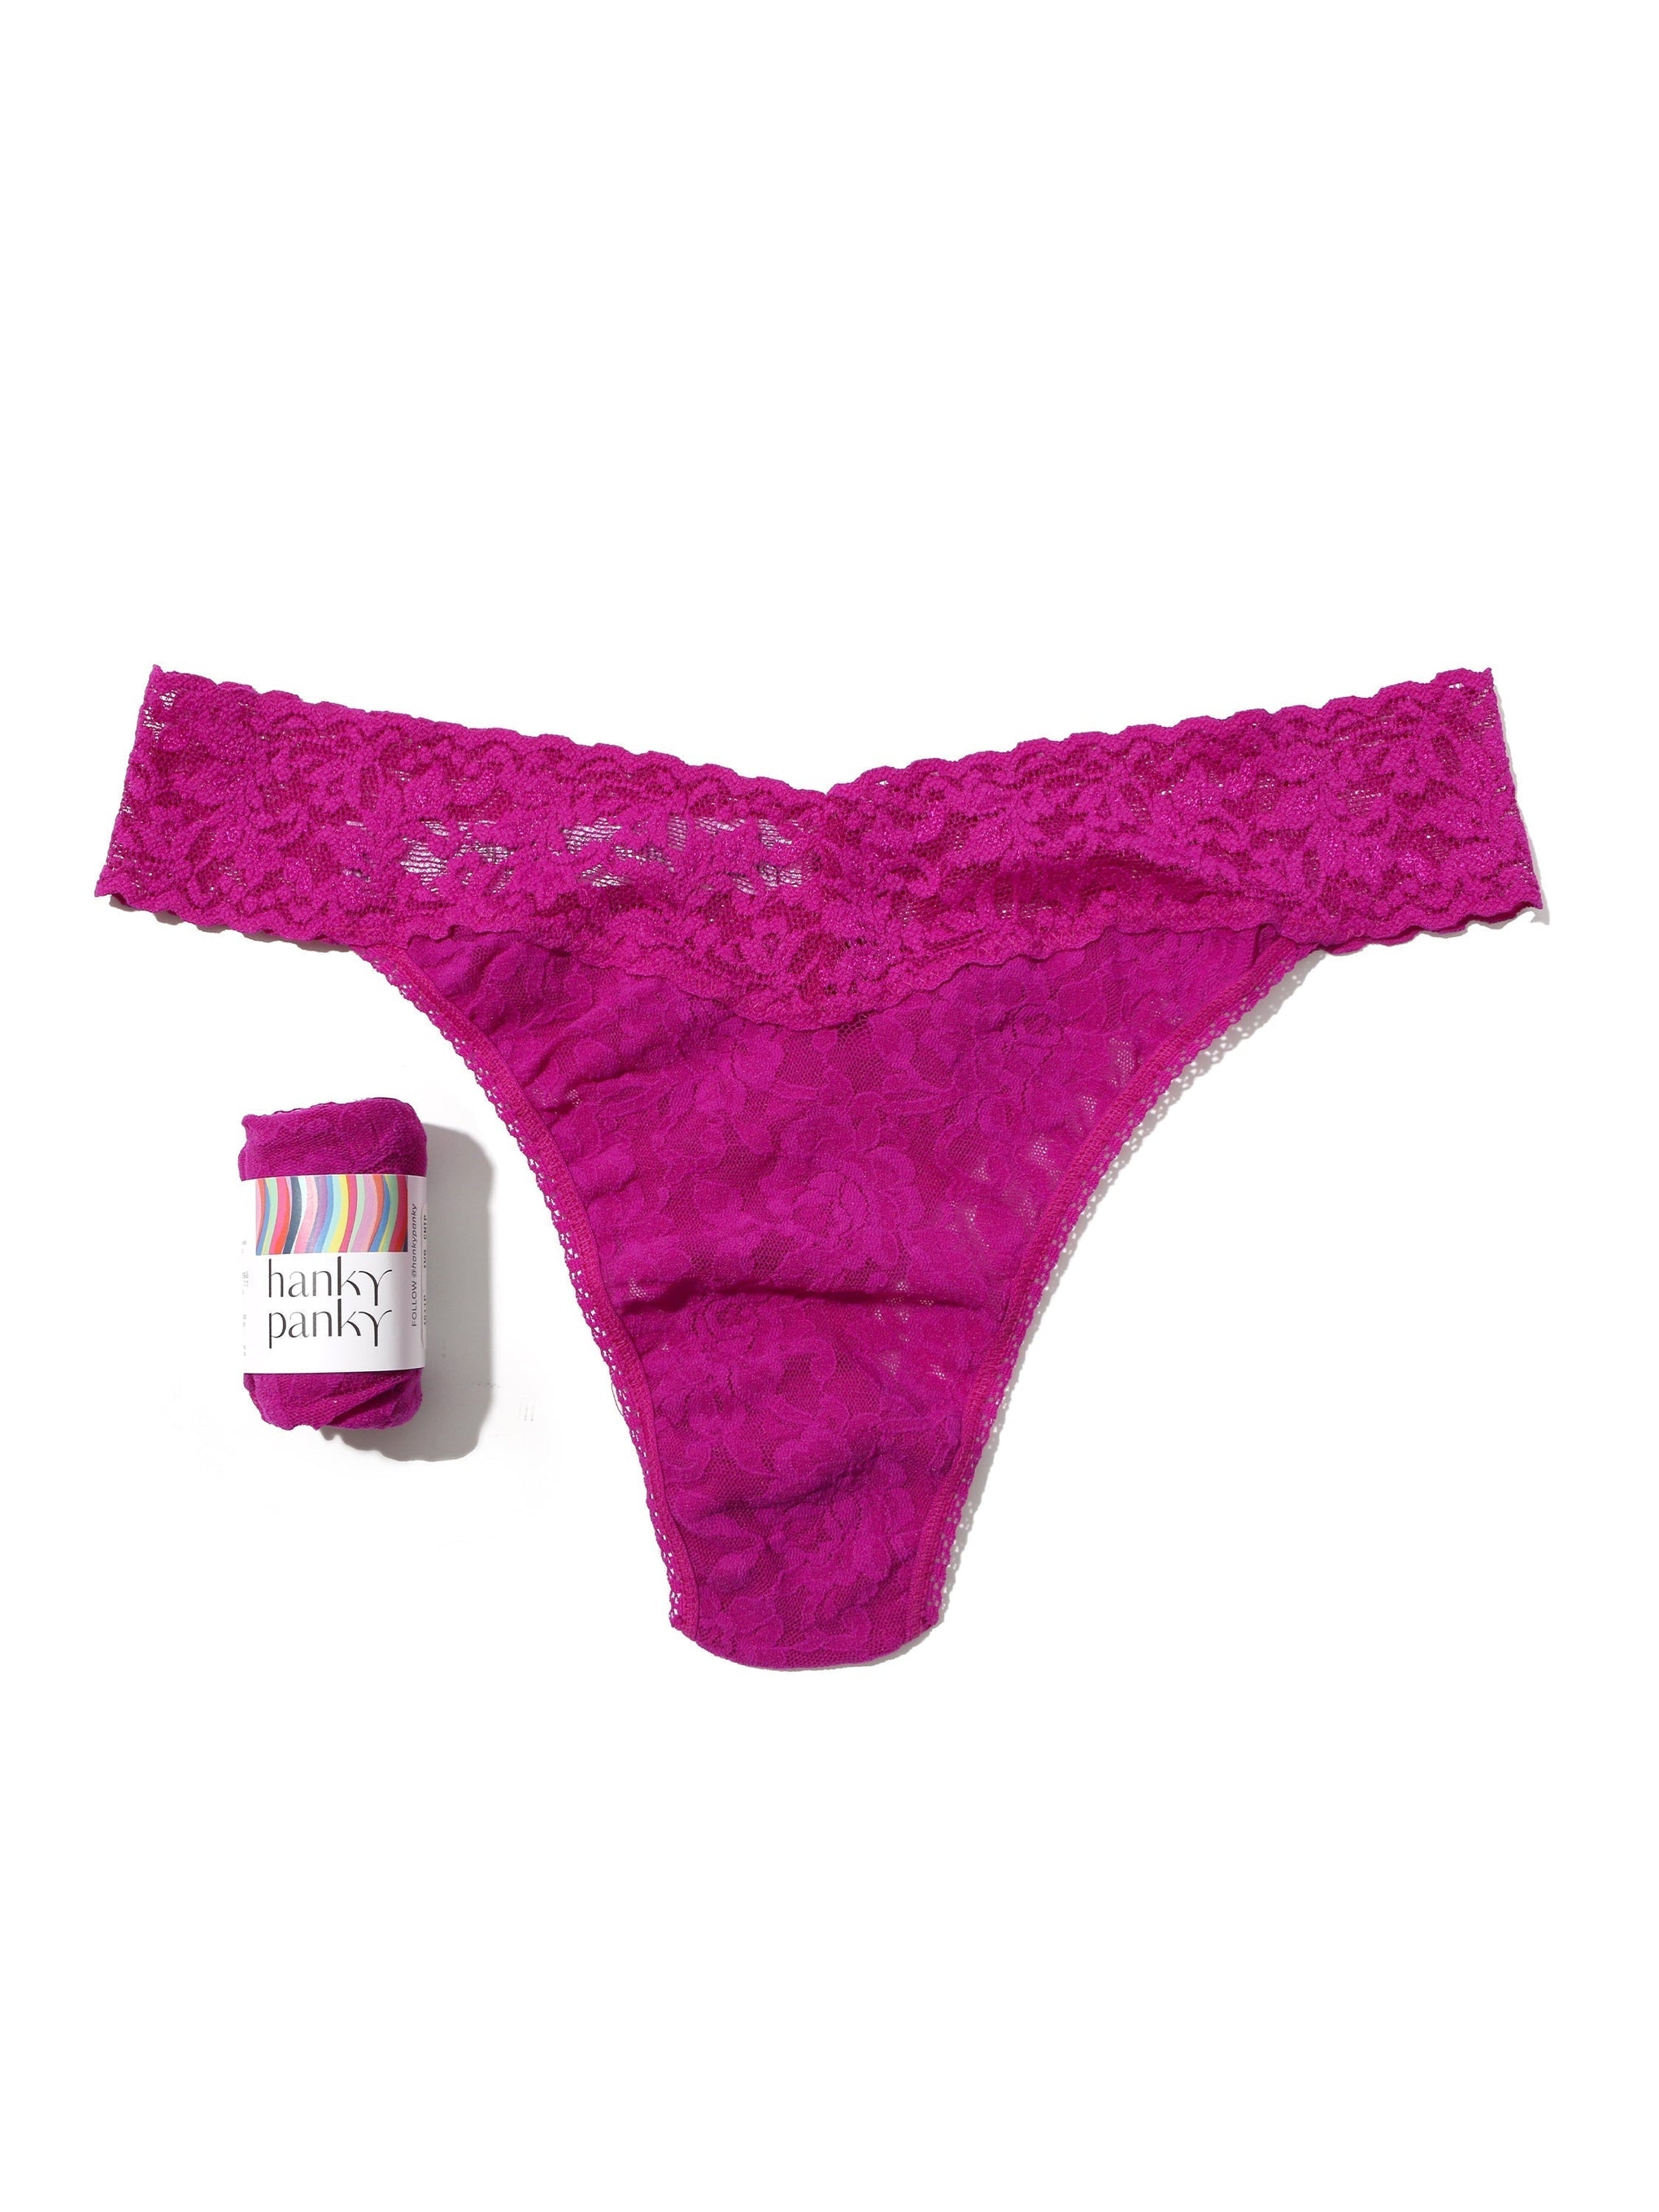 Hanky Panky A5852 Pink Signature Lace Boyshorts Panty Women's